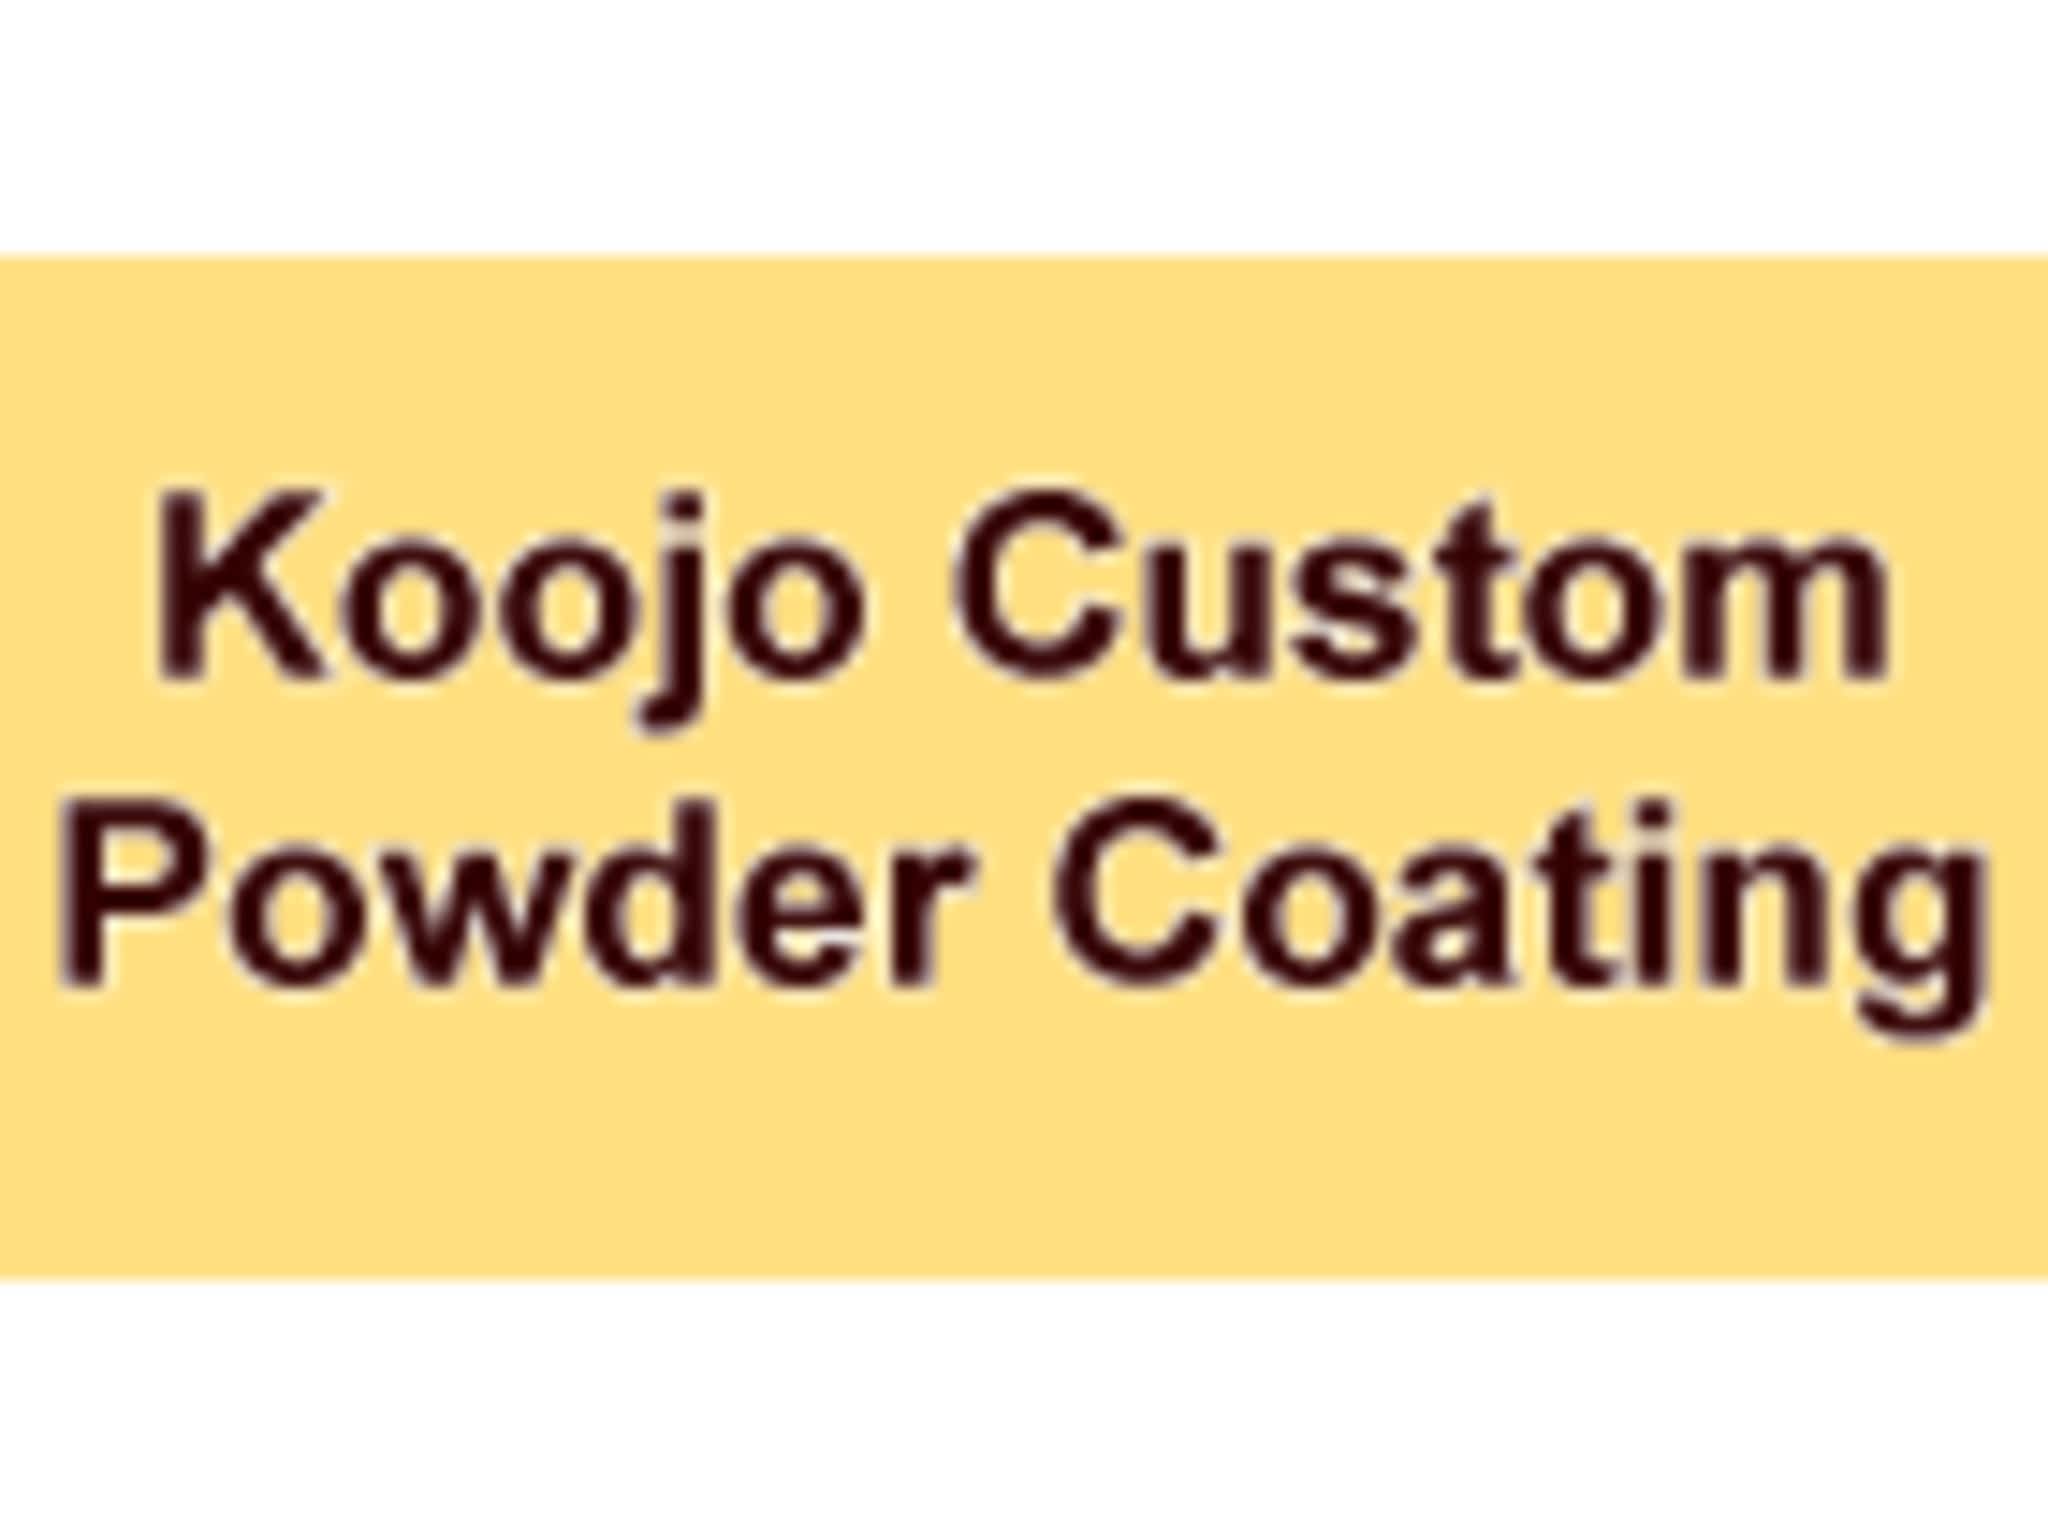 photo Koojo Custom Powder Coating